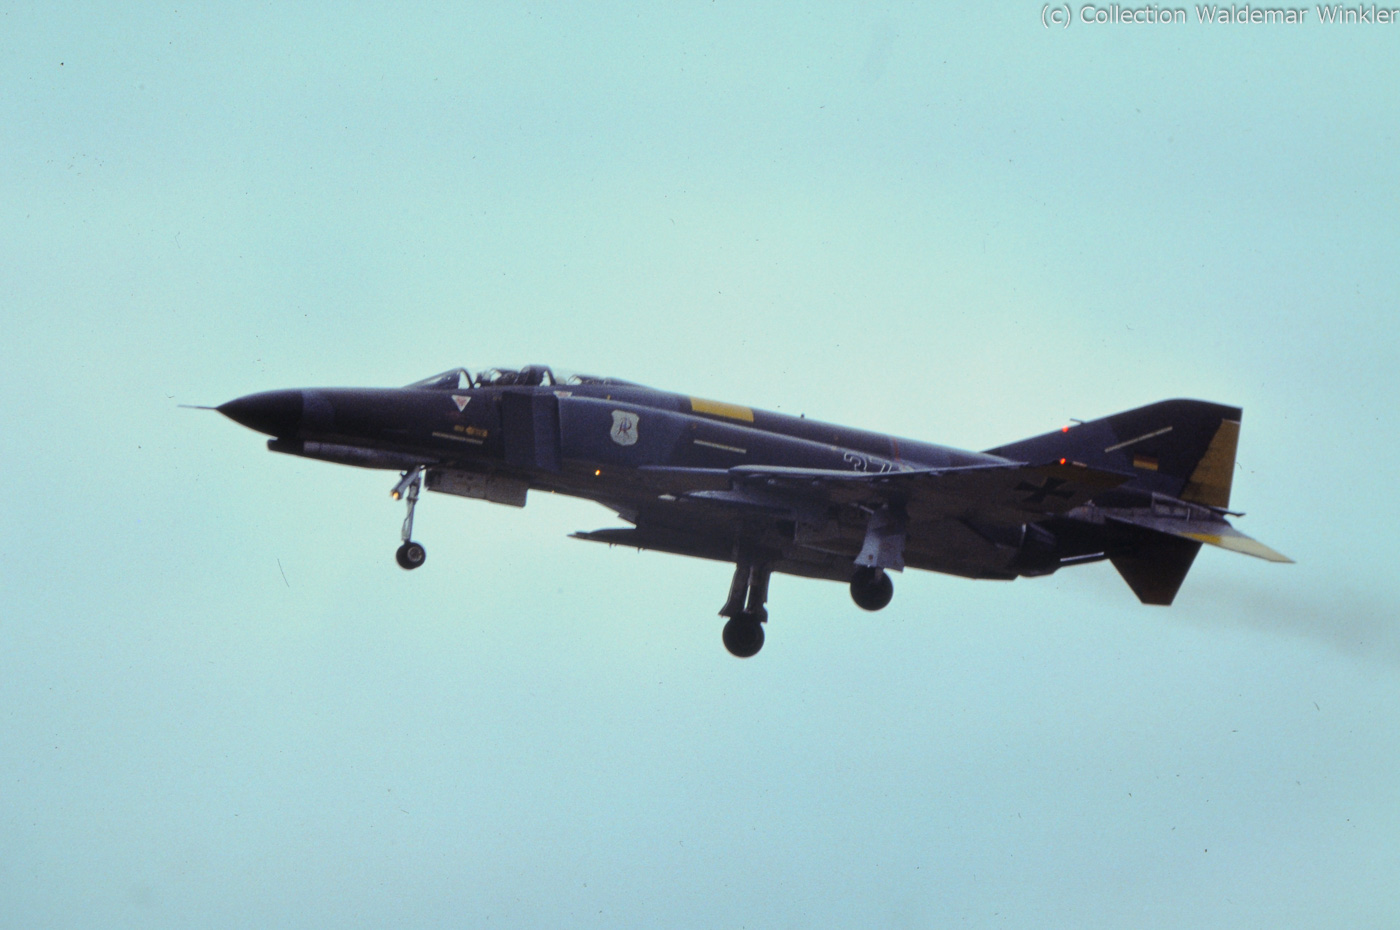 F-4_Phantom_II_DSC_1178.jpg